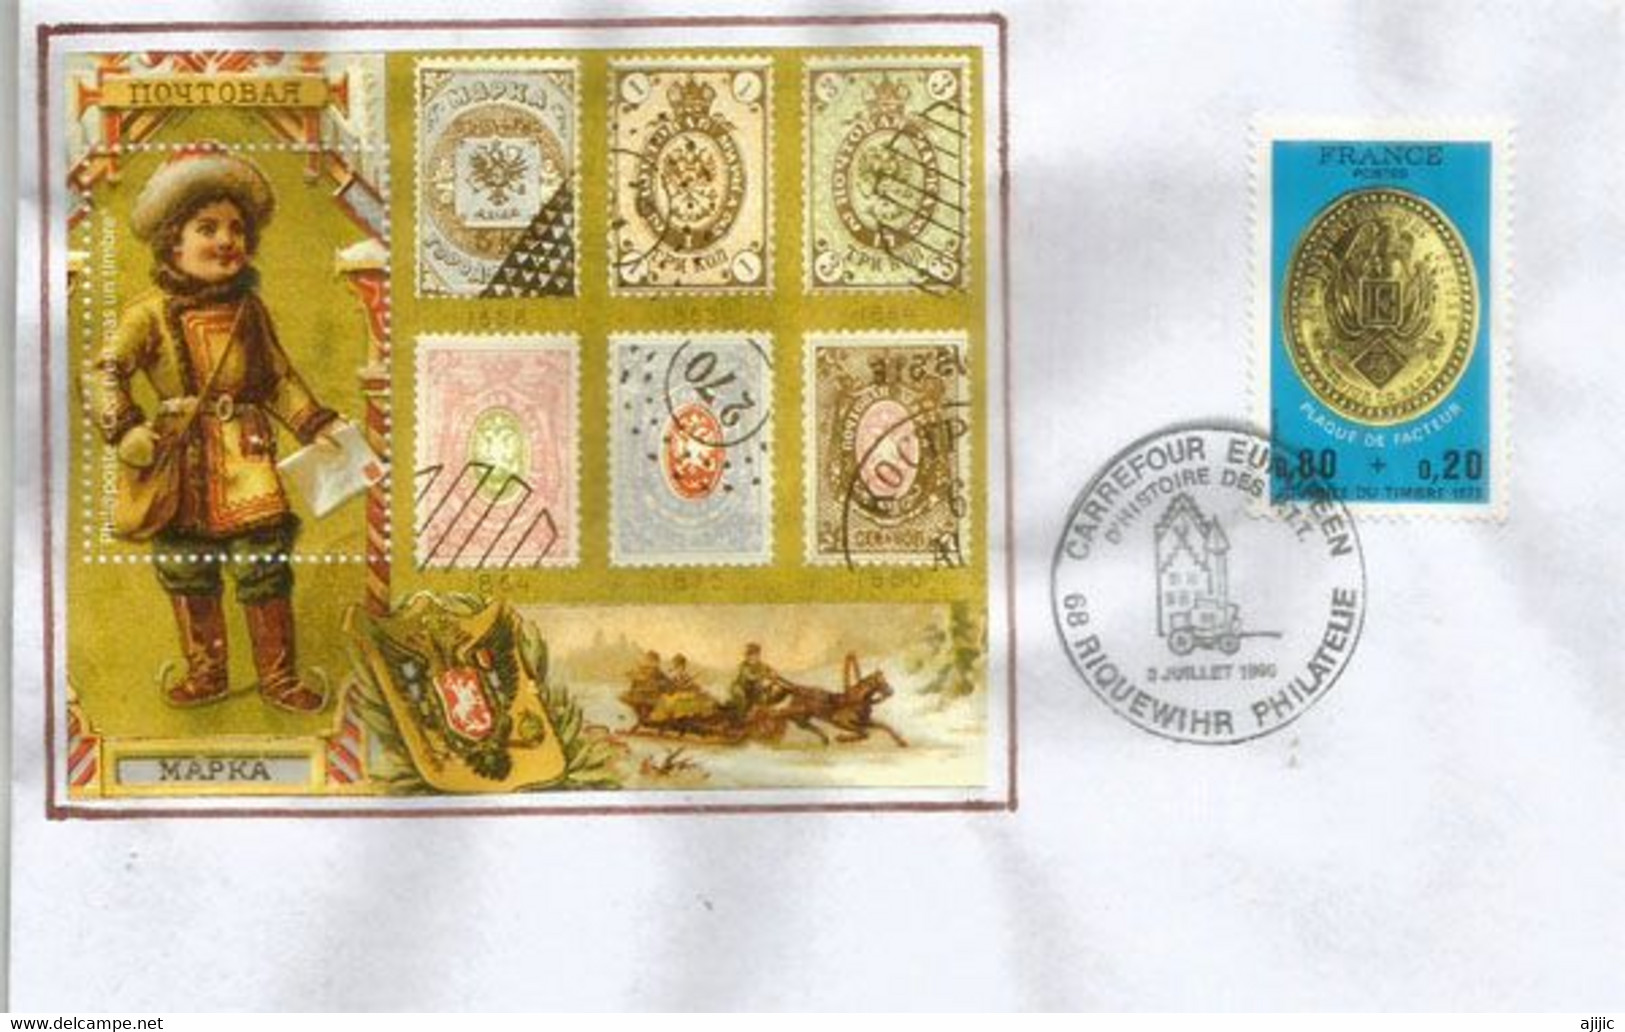 Postal Service History France With The Russian Empire, On Cover "Carrefour Europeen" Riquewihr. France. (Vignette) - Abarten & Kuriositäten